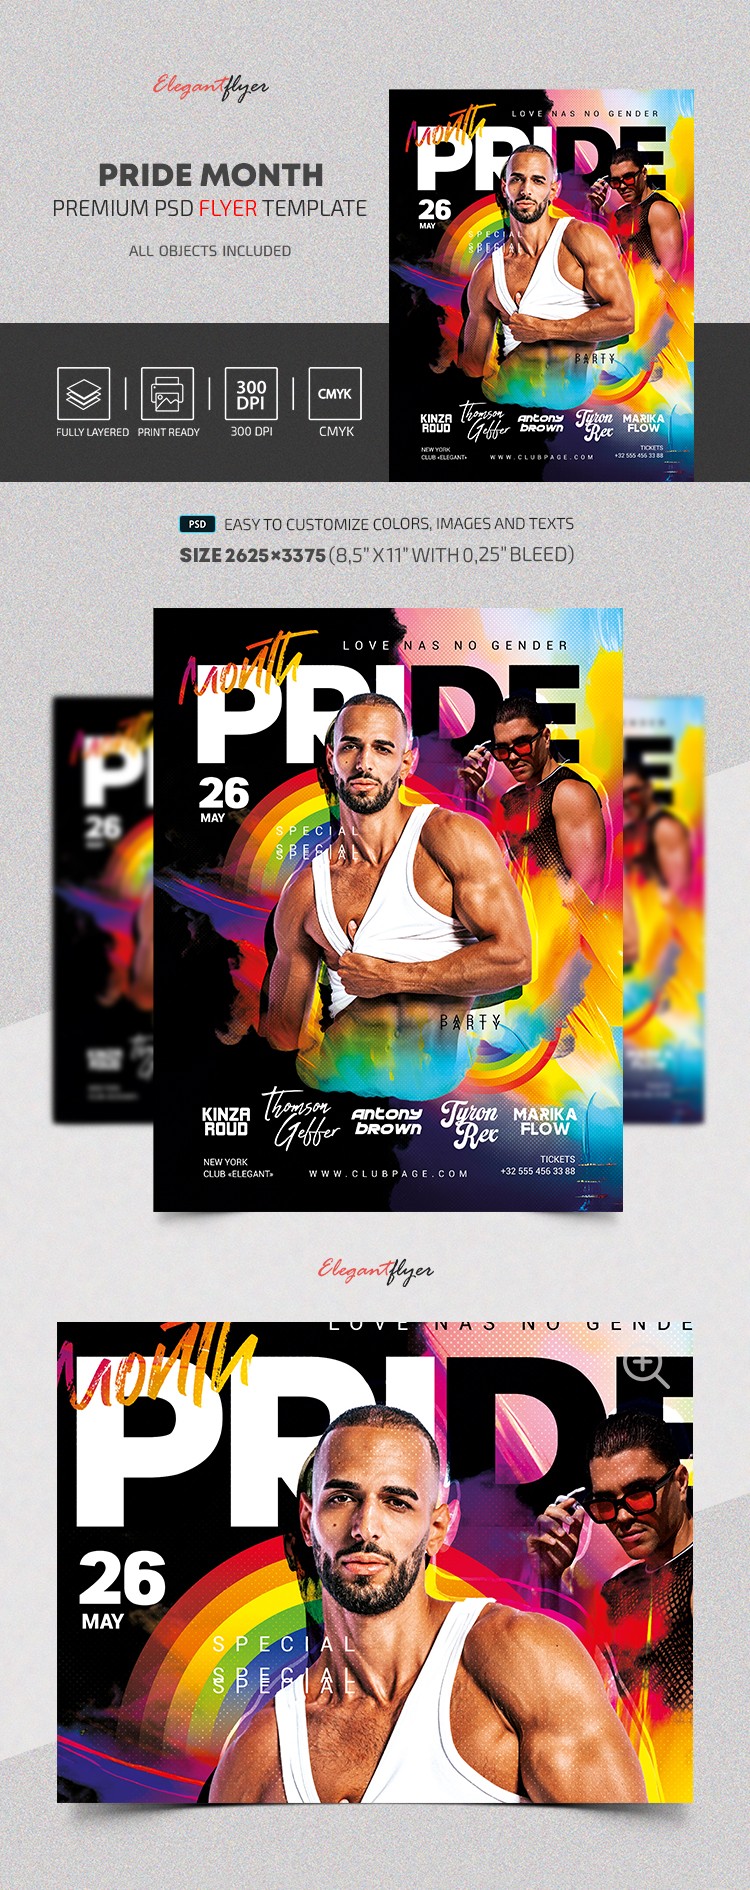 Pride Month - Premium PSD Flyer Template by ElegantFlyer